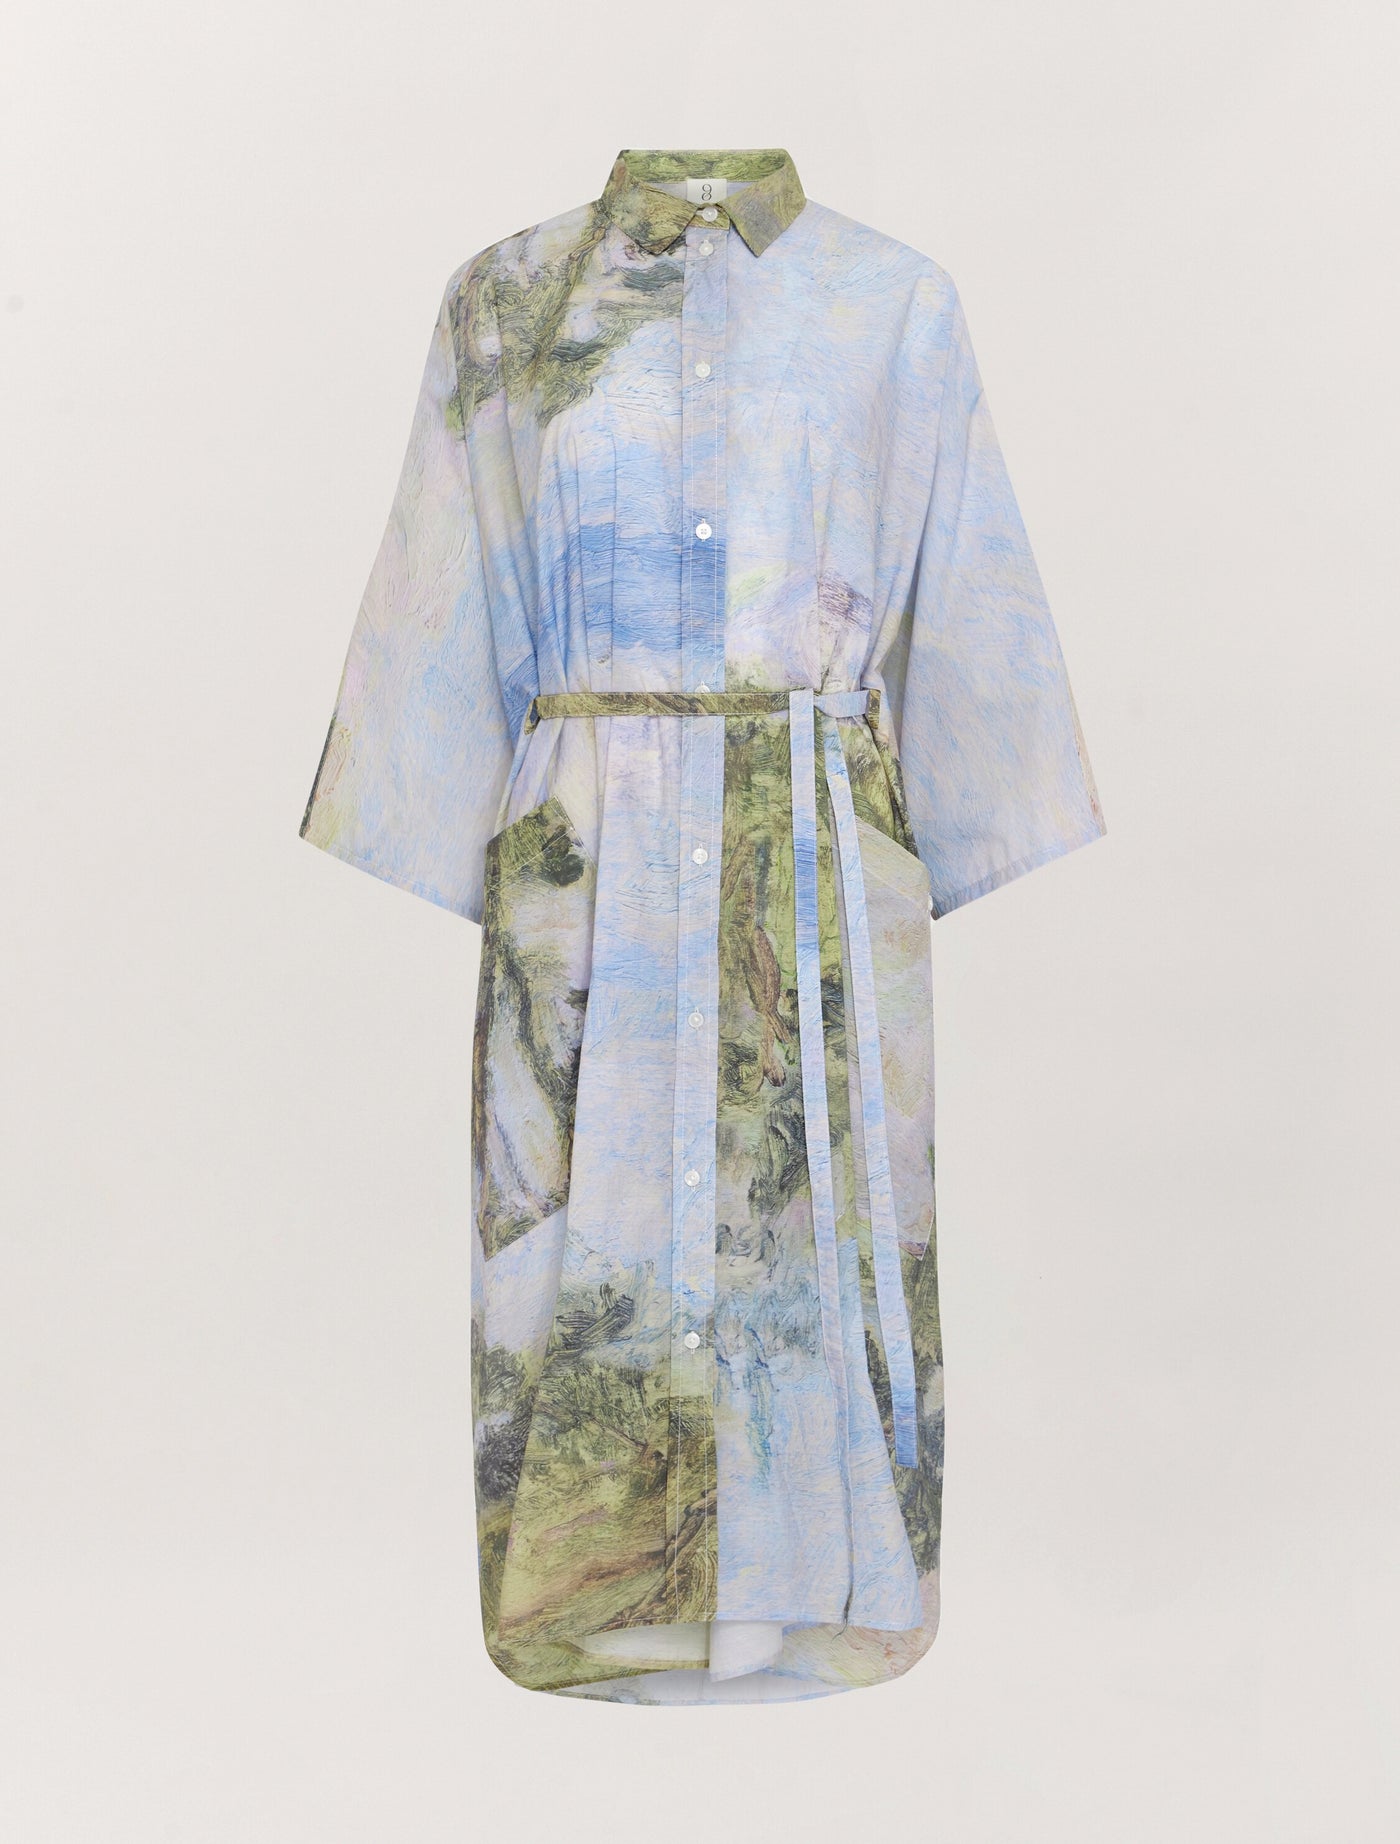 Episokpi Shirt Dress in Two Trees Print